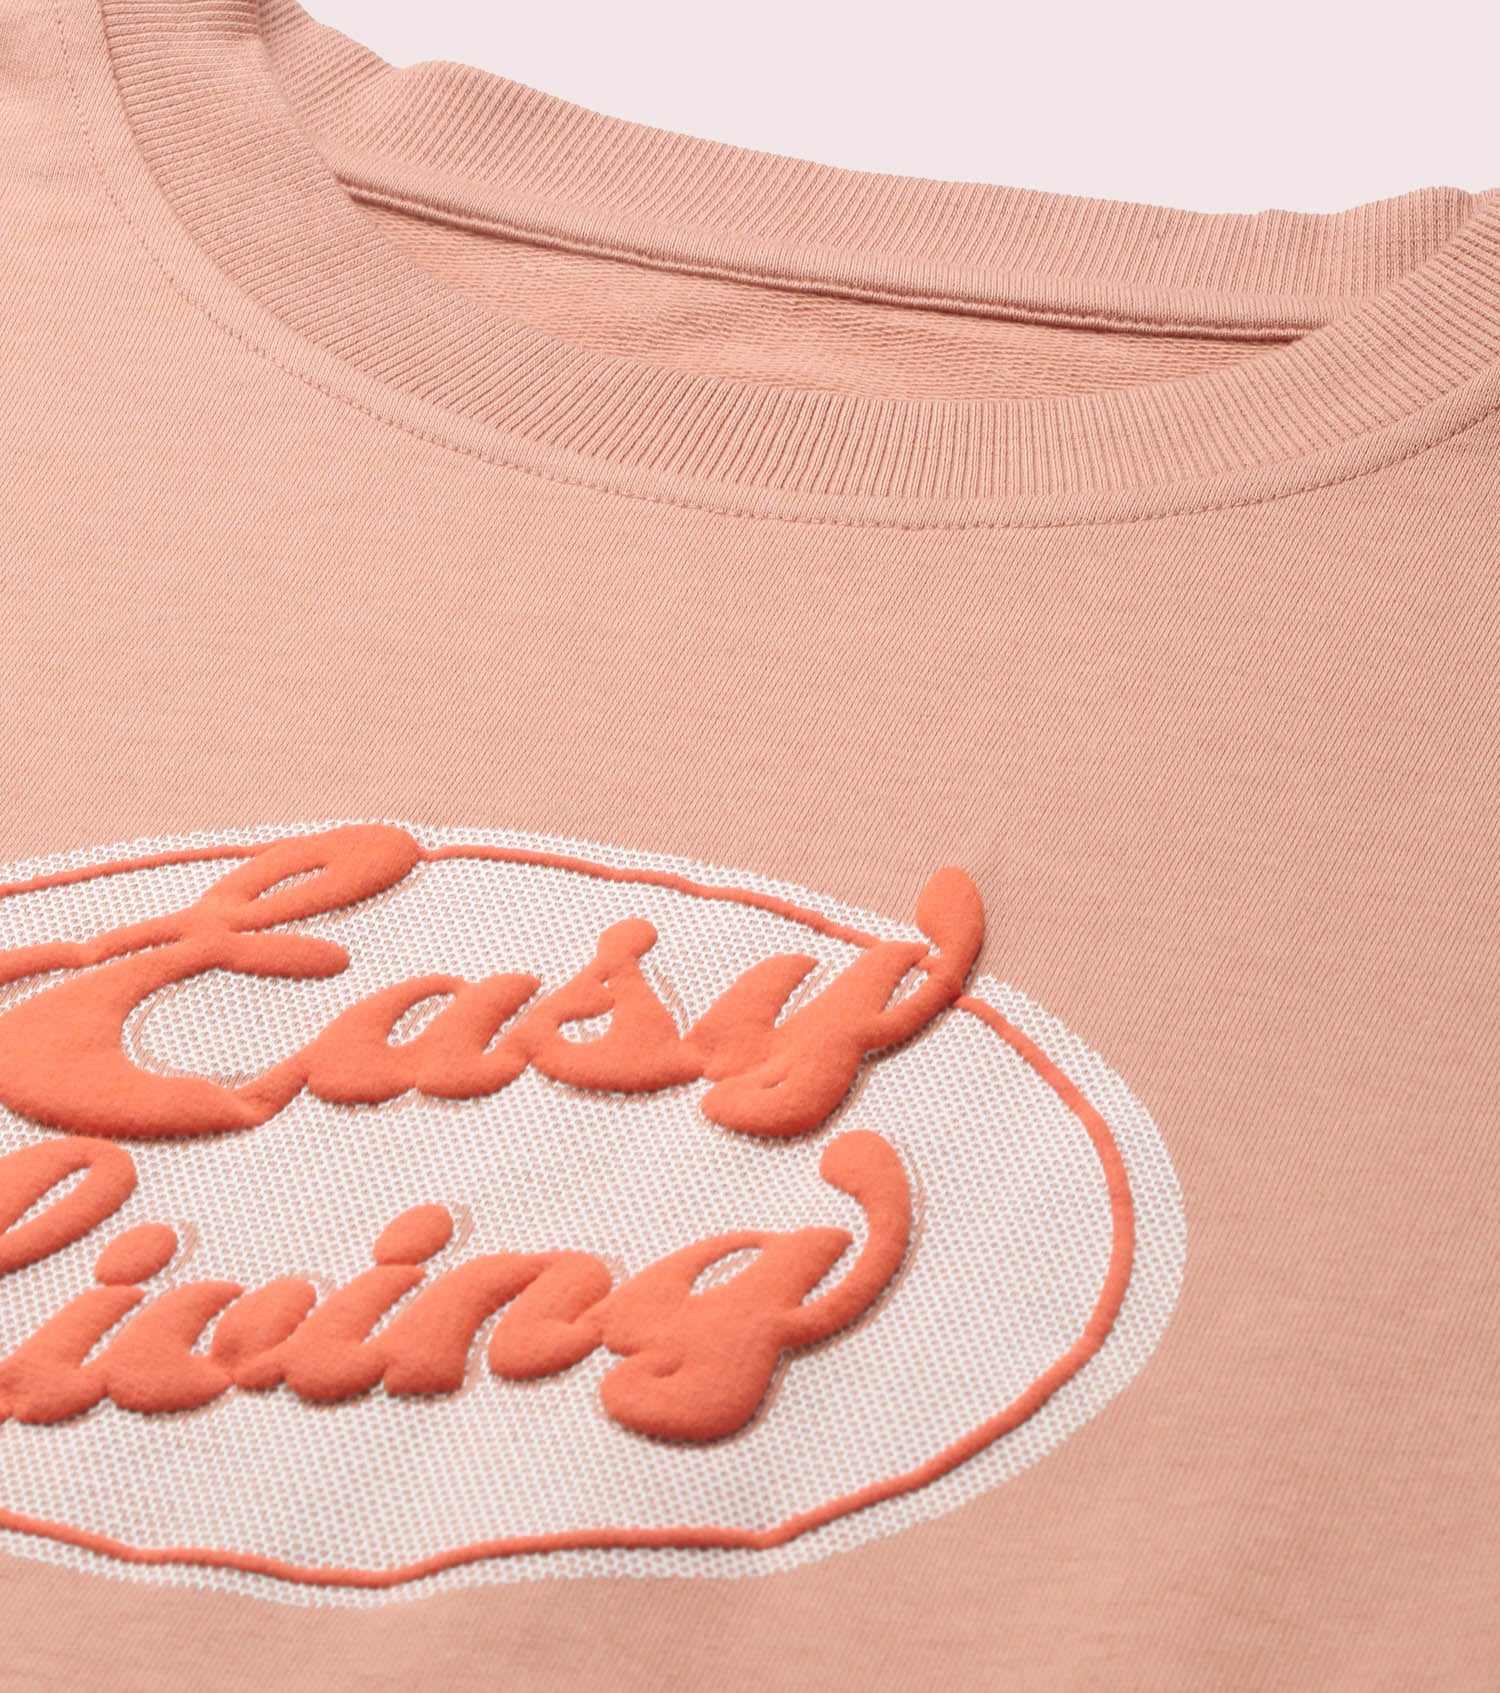 Enamor Drop Shoulder Sweat For Women | Cotton Terry Graphic Sweatshirt | E9G2